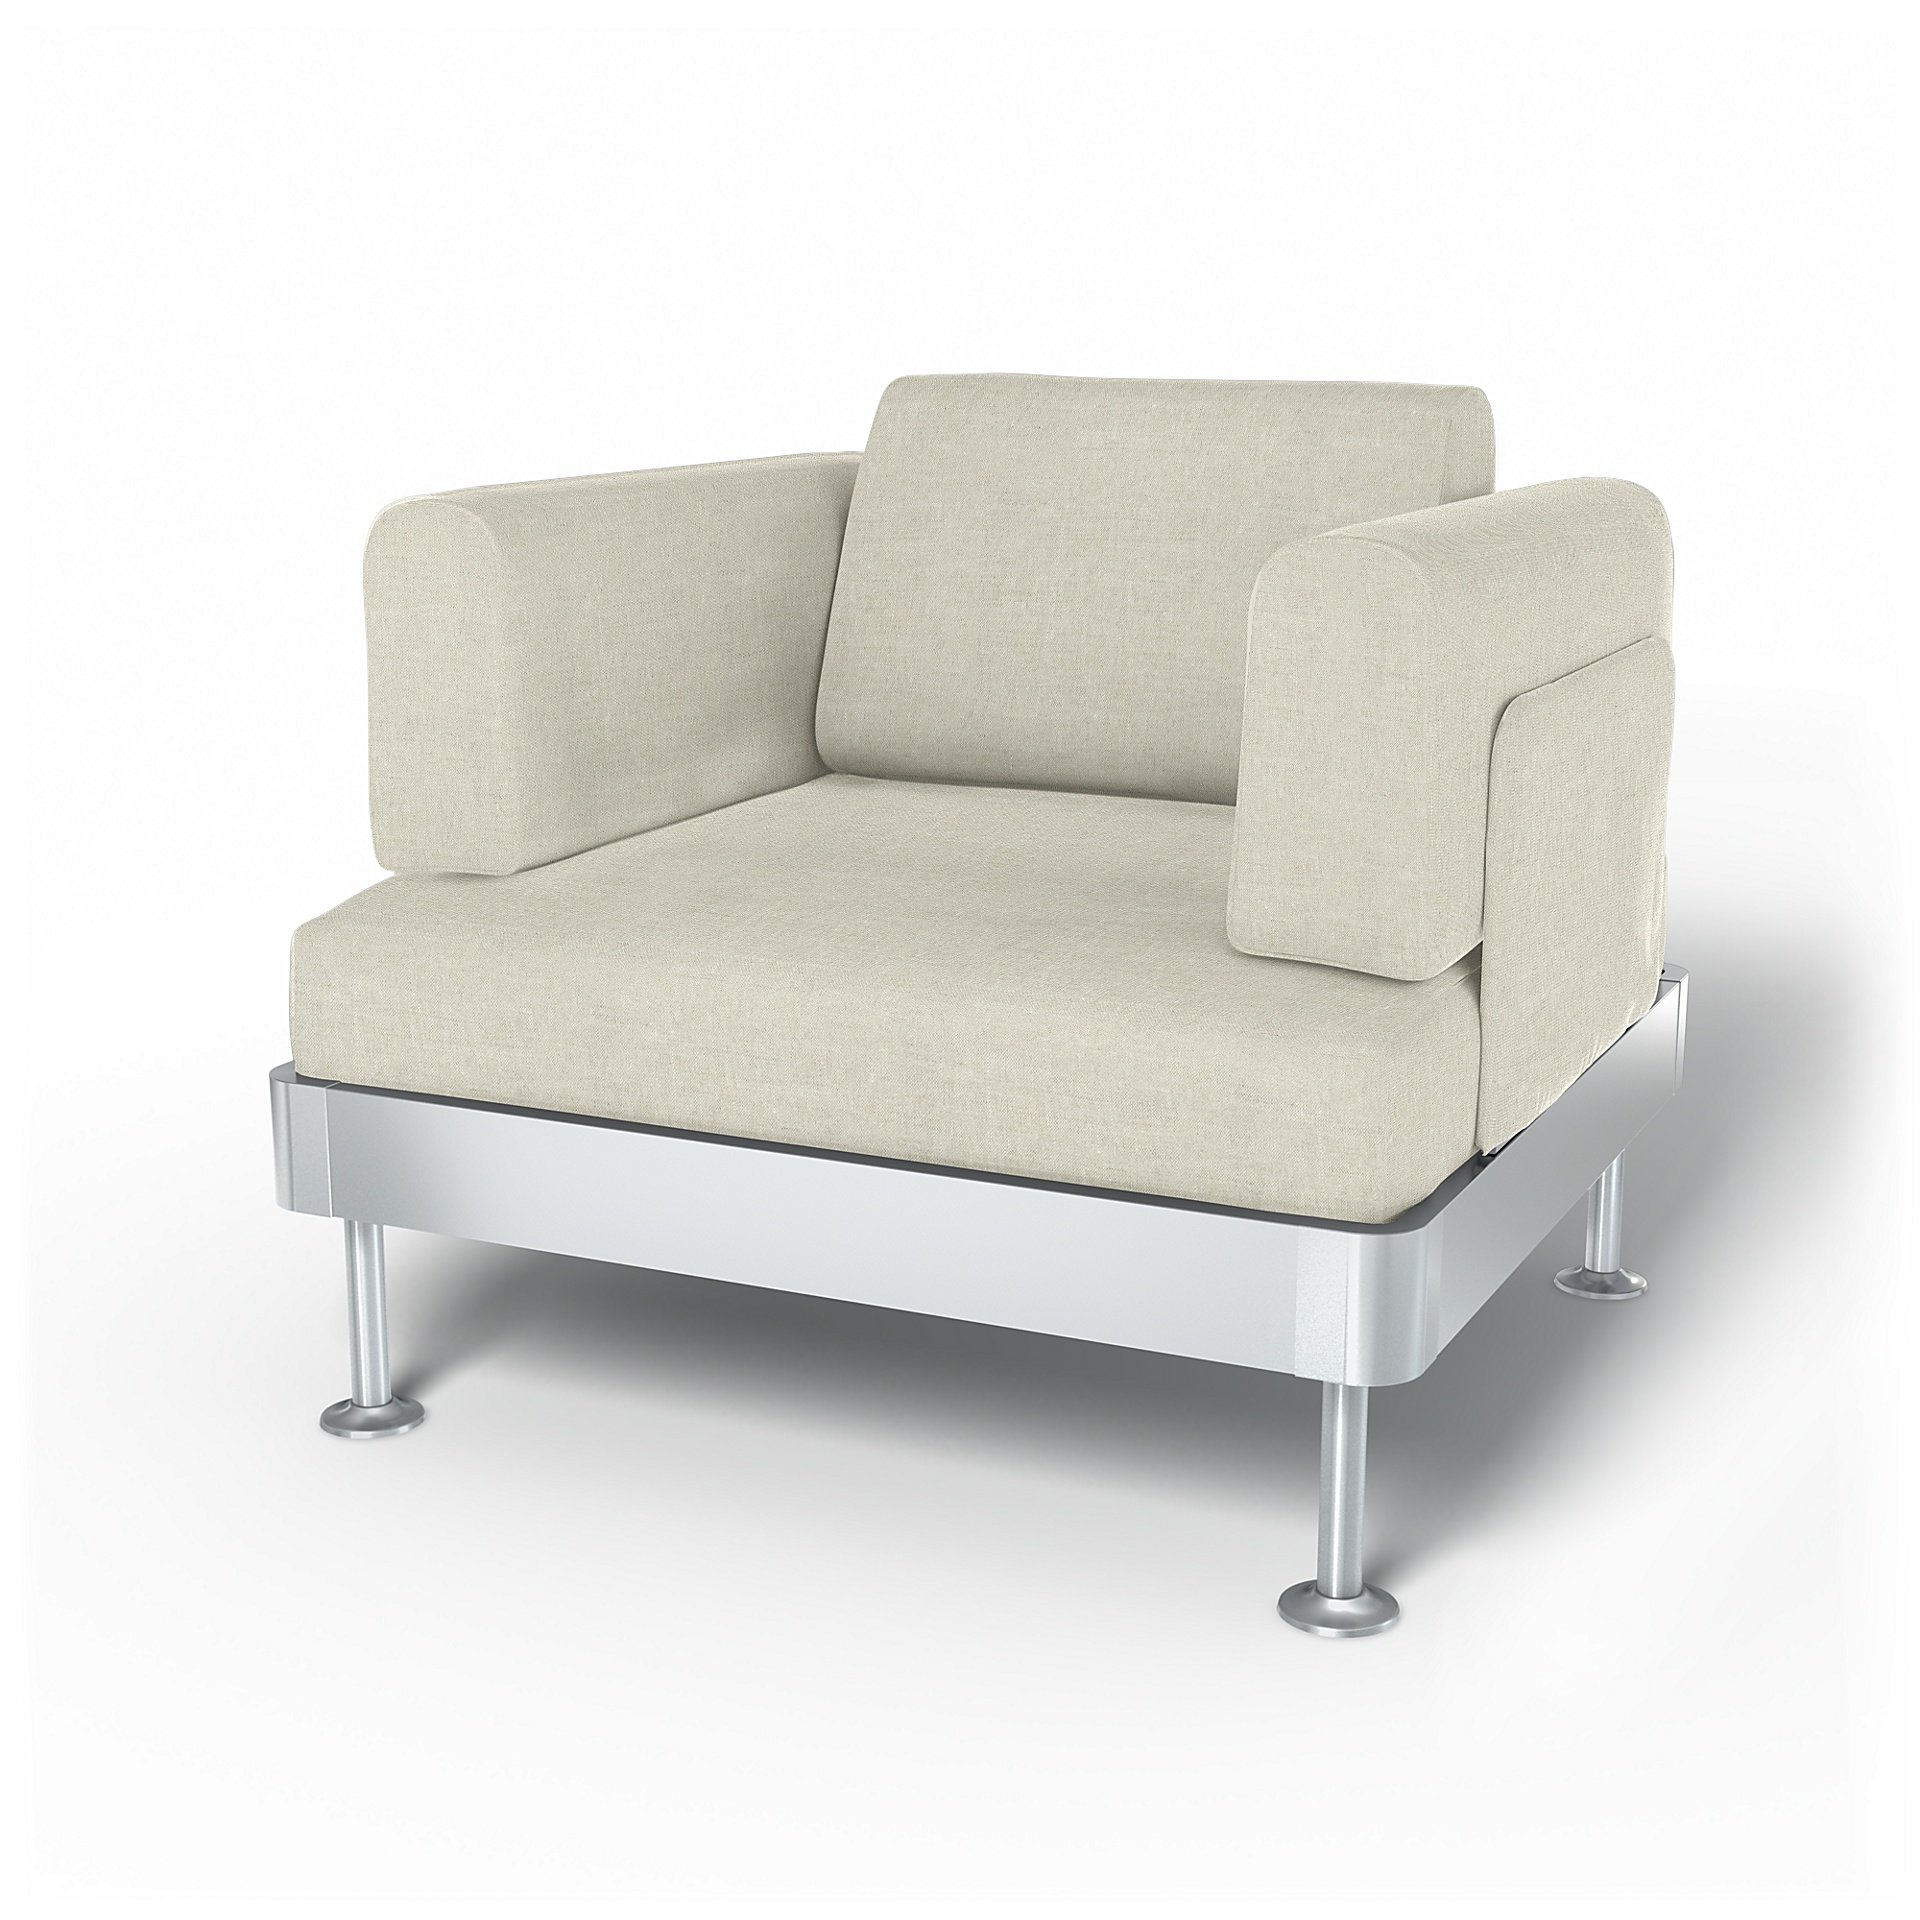 IKEA - Delaktig Armchair Cover, Natural, Linen - Bemz